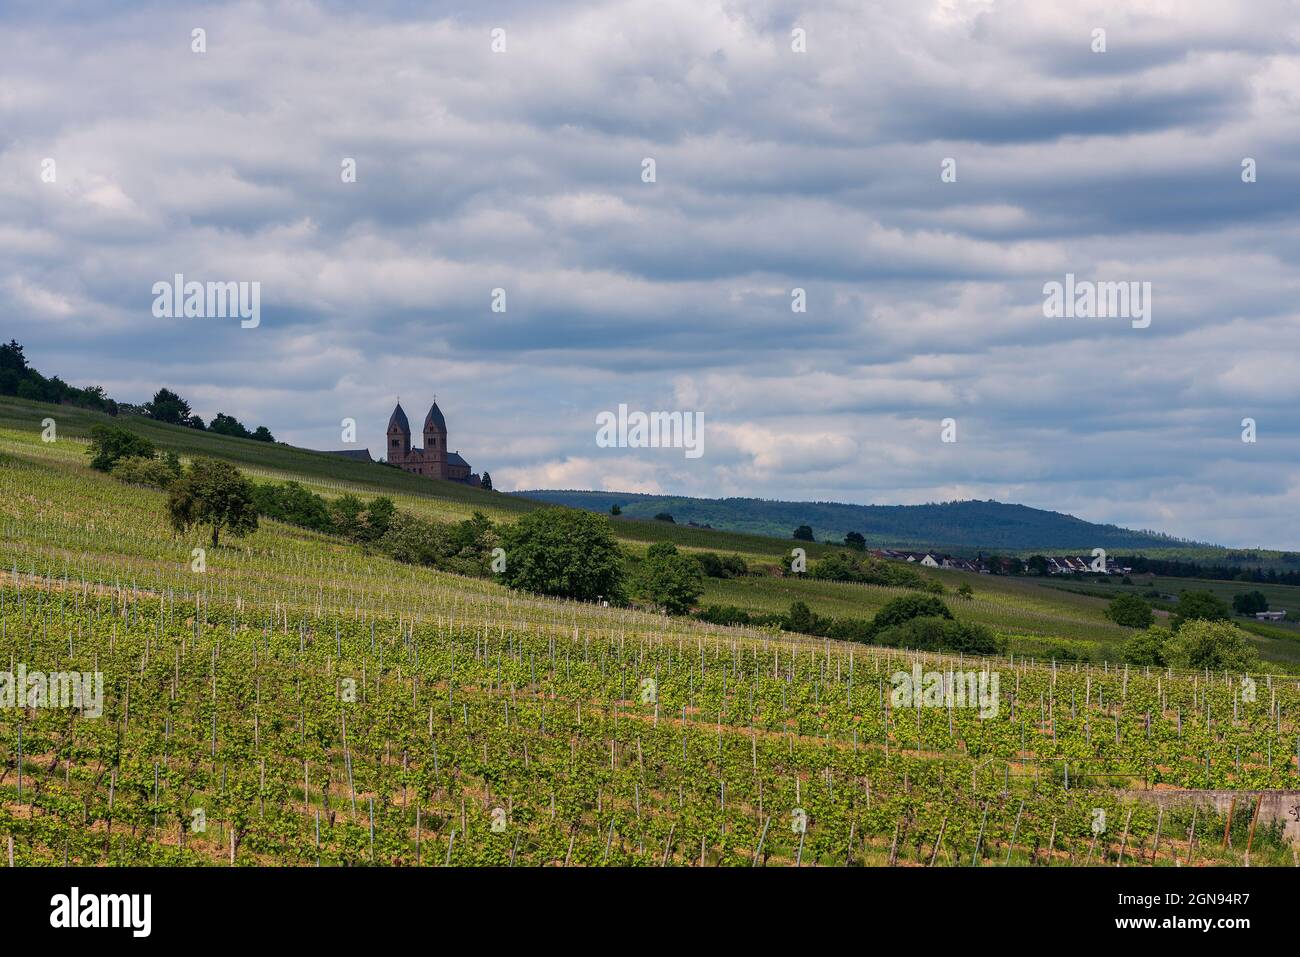 Panoramic view of the St. Hildegard Abbey near Ruedesheim am Rhein in Germany. Stock Photo